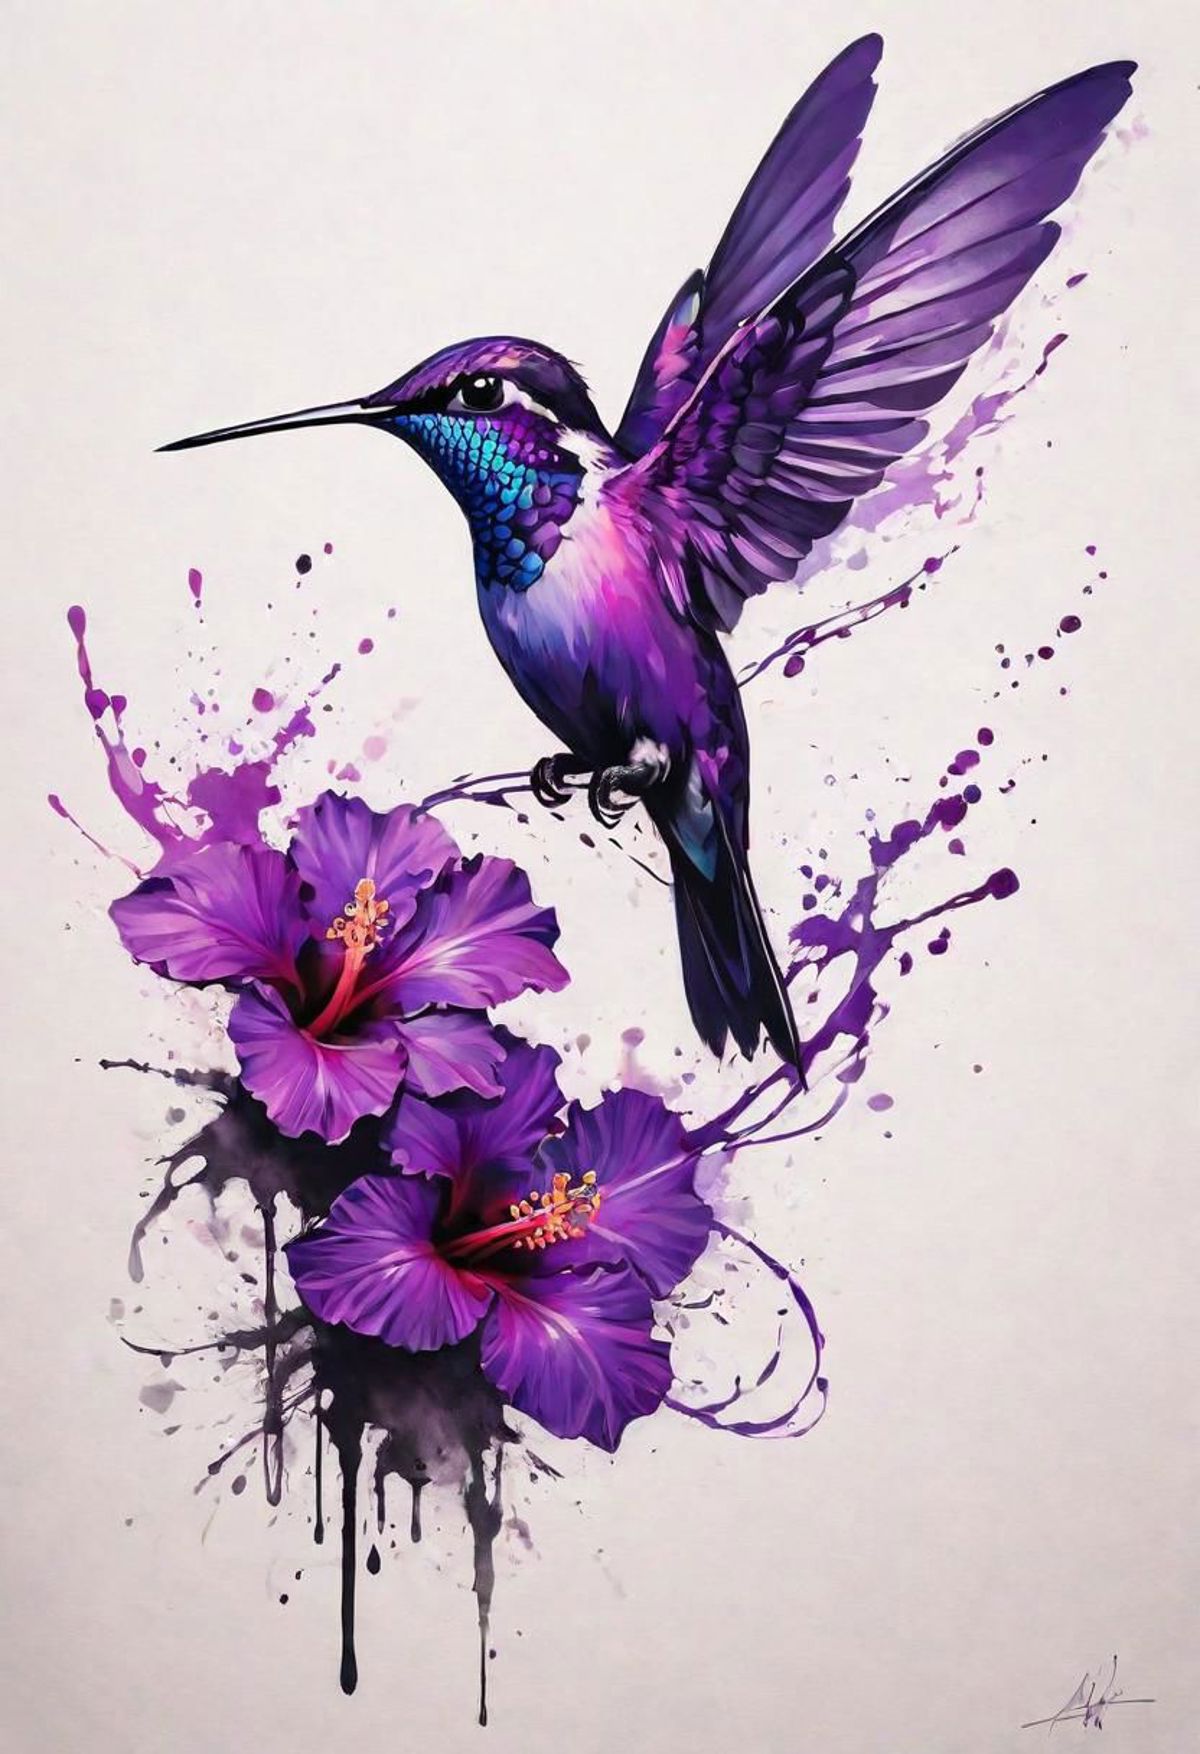 A purple hummingbird with a long beak perched on a purple flower.